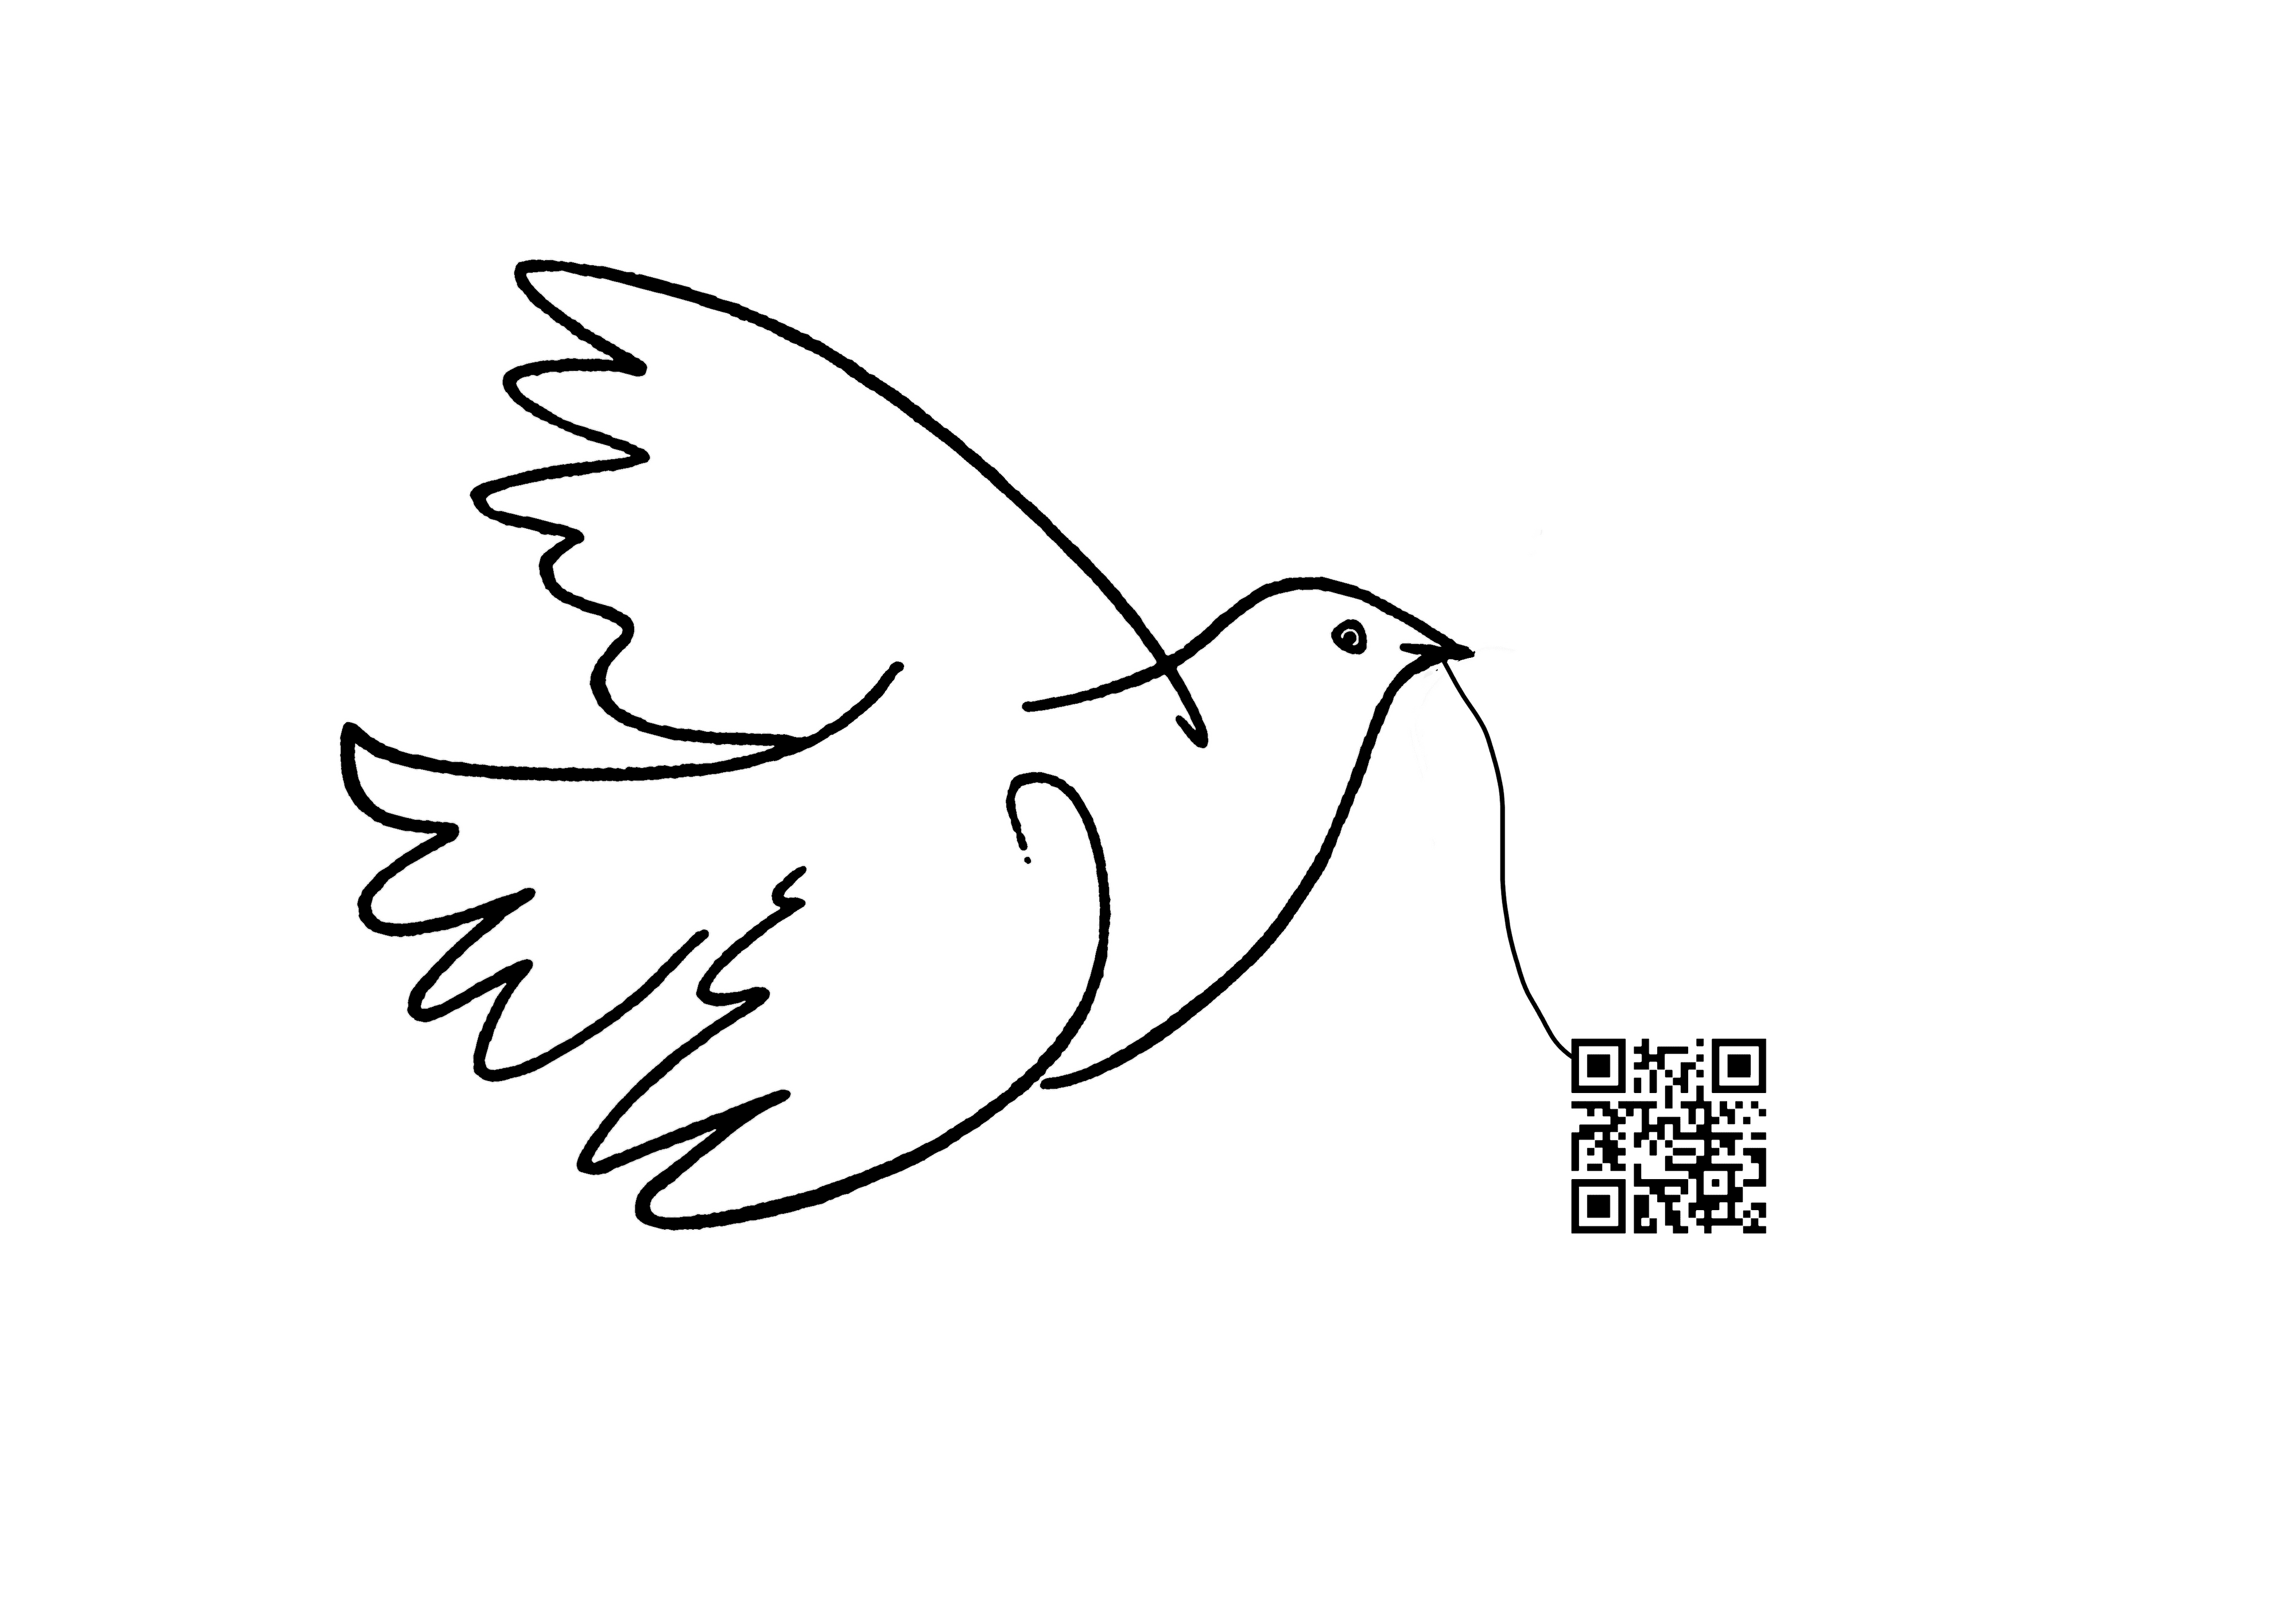 Dove of peace (Picasso) - 2021